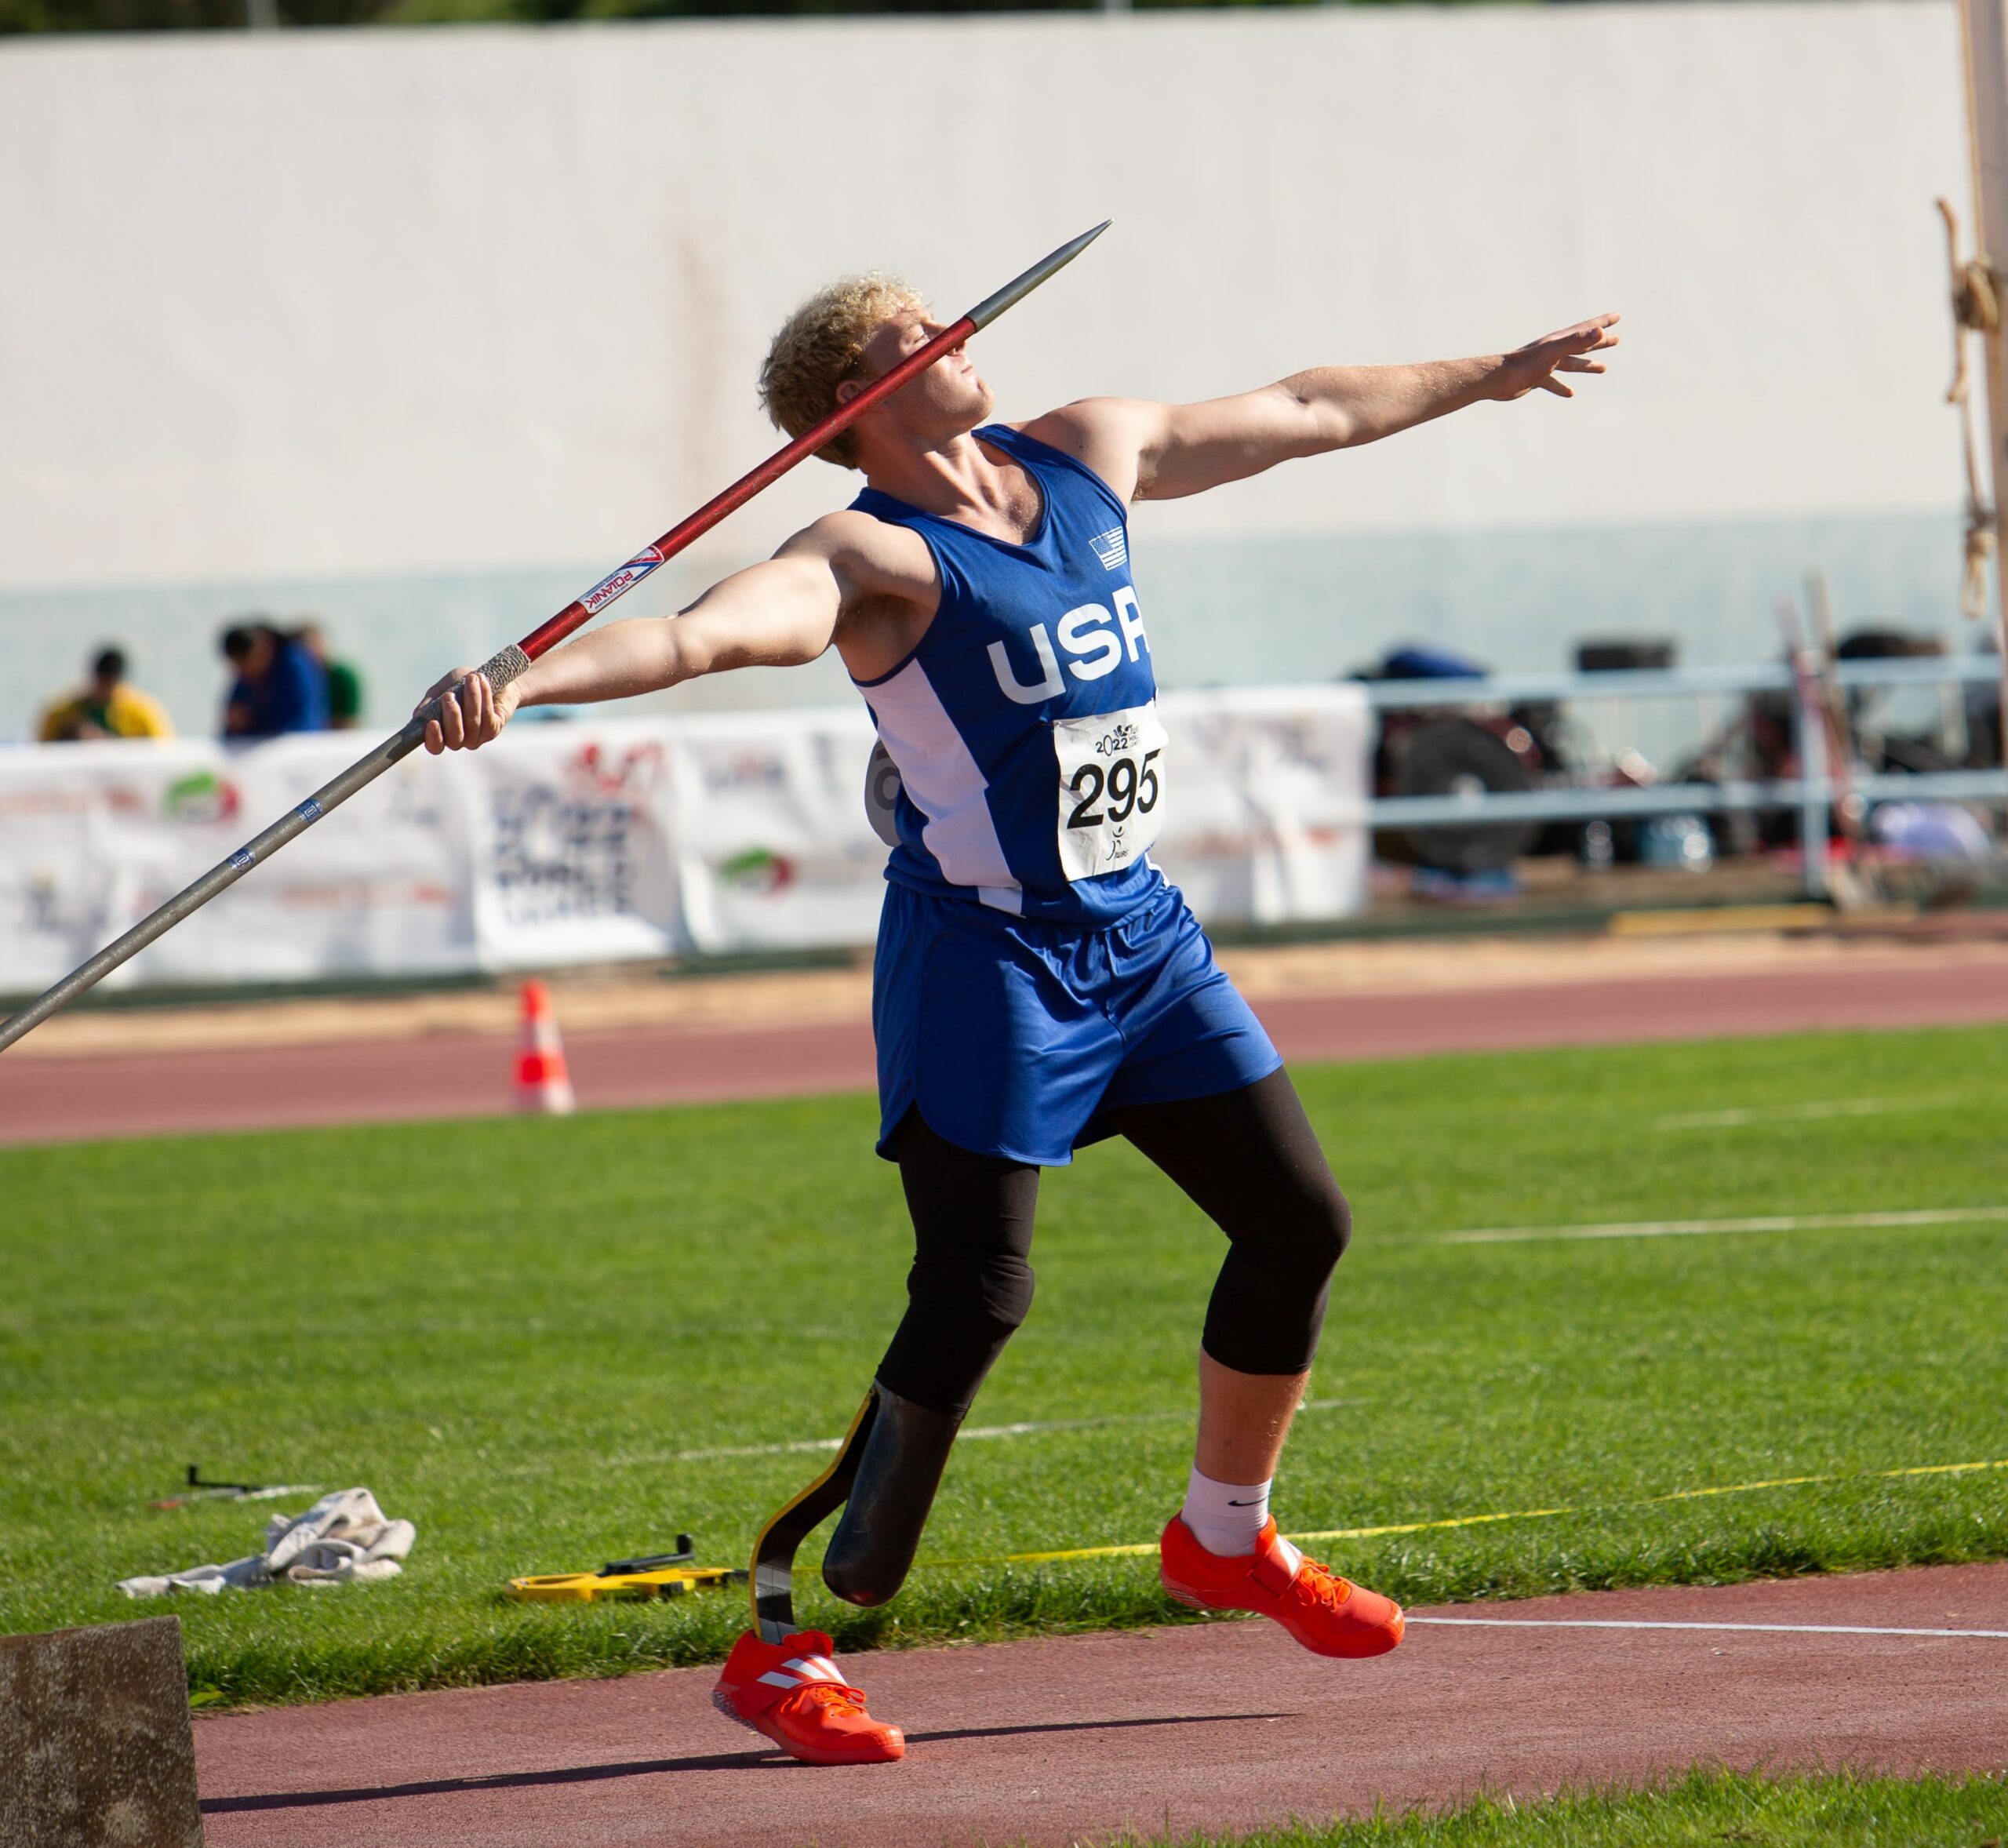 Derik Smith throwing javelin at the IWAS 2022 World Games